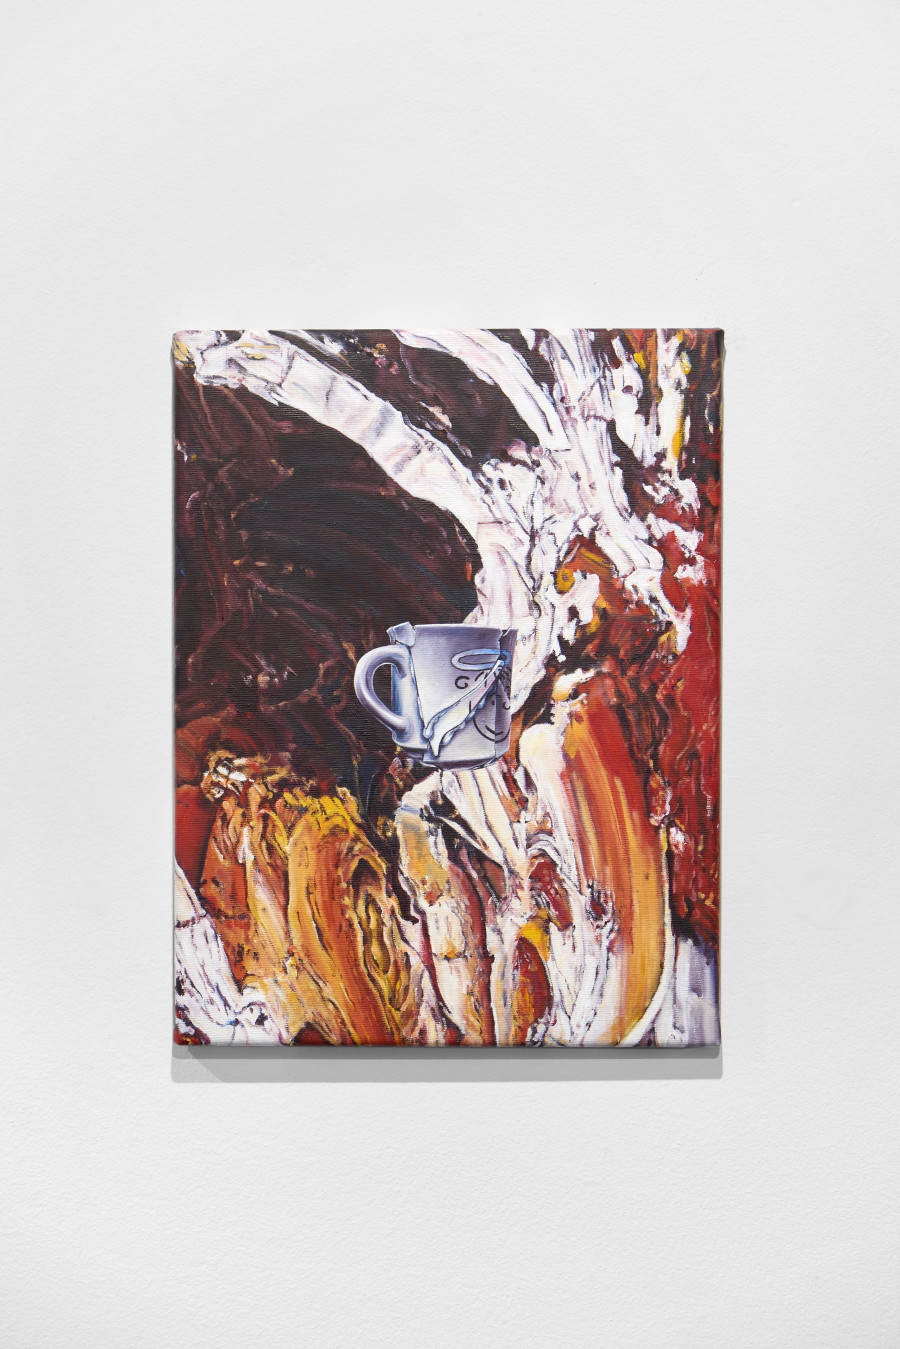 Mathieu Dafflon, Aline's mug, 2022. Oil on canvas, 42 x 32 cm, (Ref. DAF010220). Photo: by Philipp Hänger